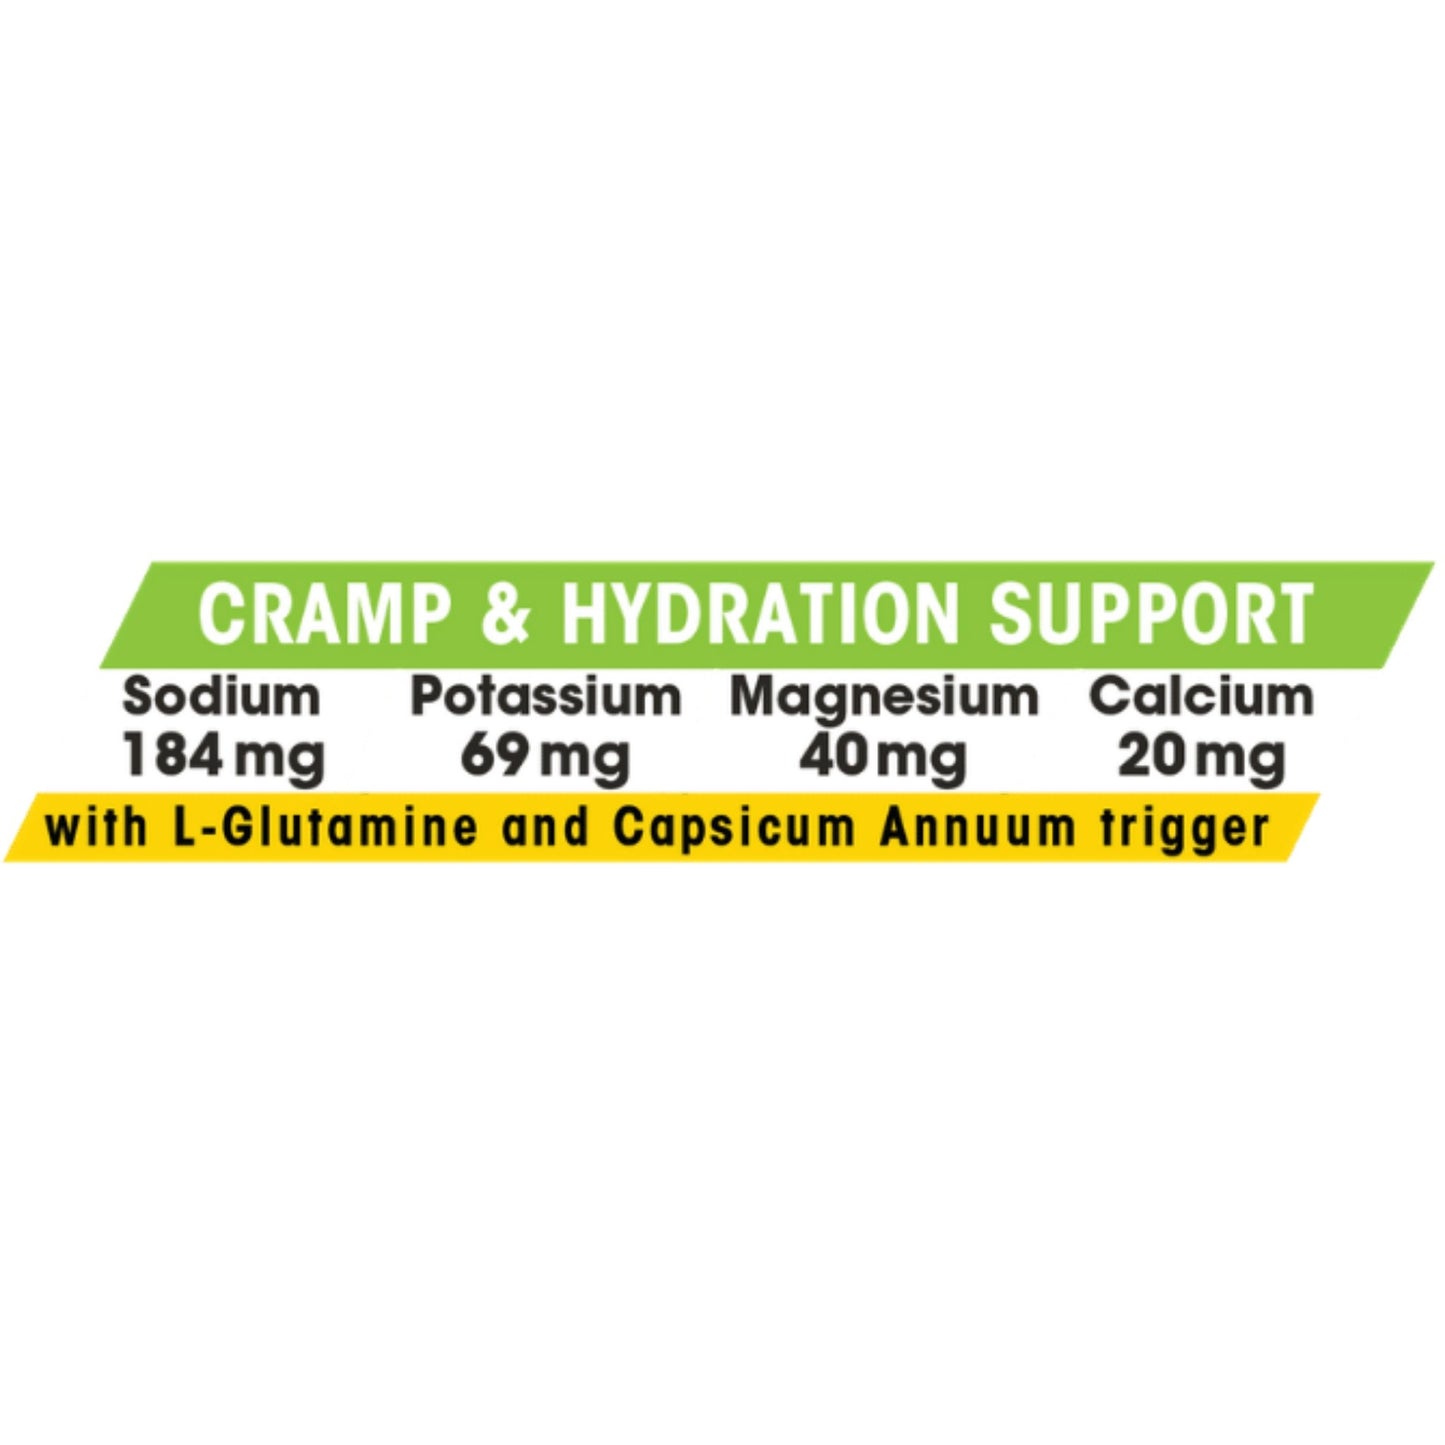 Cramp Assalt - Anti-Cramp & Electrolyte Gel - 32Gi United Kingdom